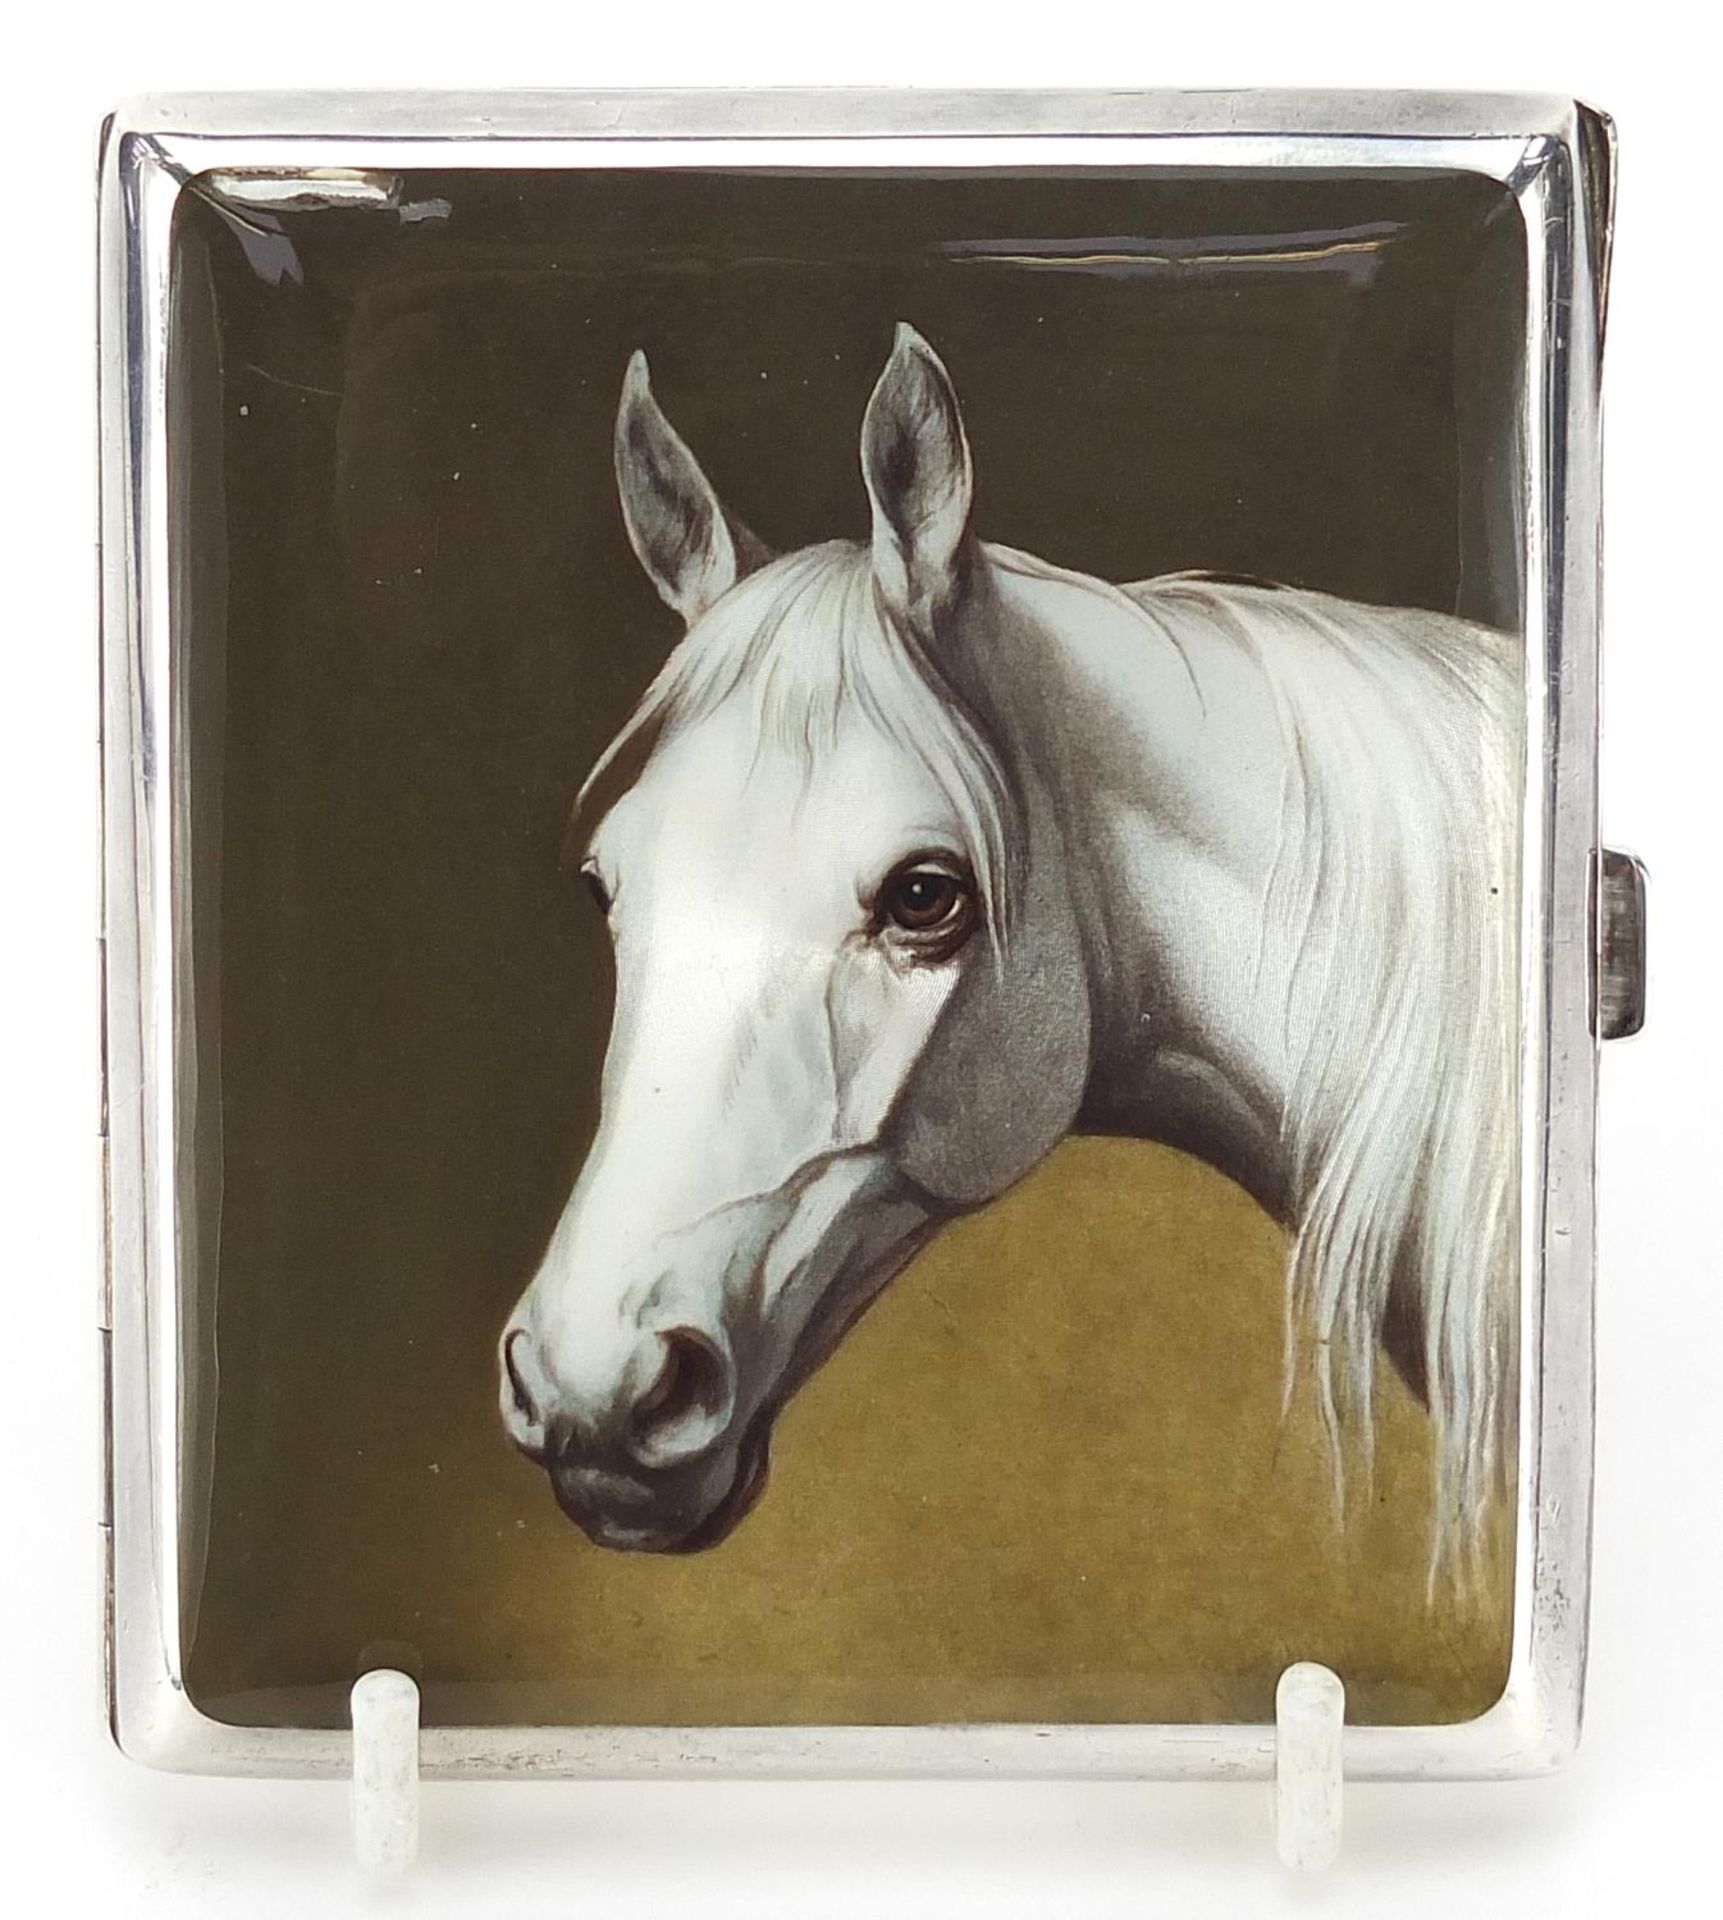 900 silver and enamel cigarette case depicting a horse head, 9cm x 8cm, 147.0g